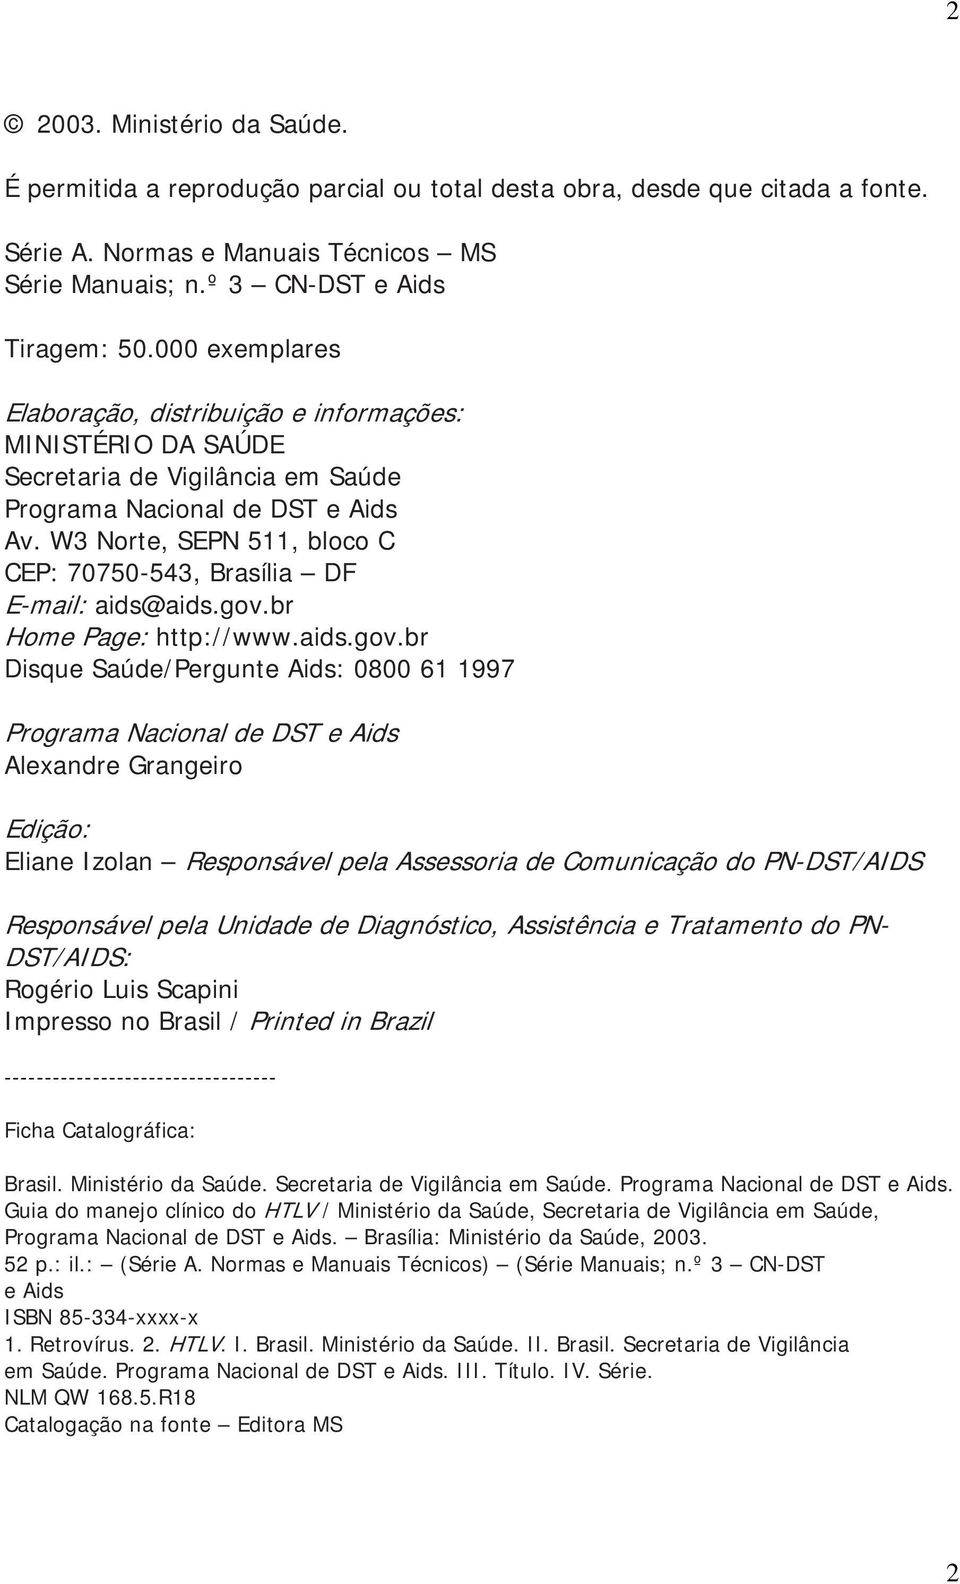 W3 Norte, SEPN 511, bloco C CEP: 70750-543, Brasília DF E-mail: aids@aids.gov.